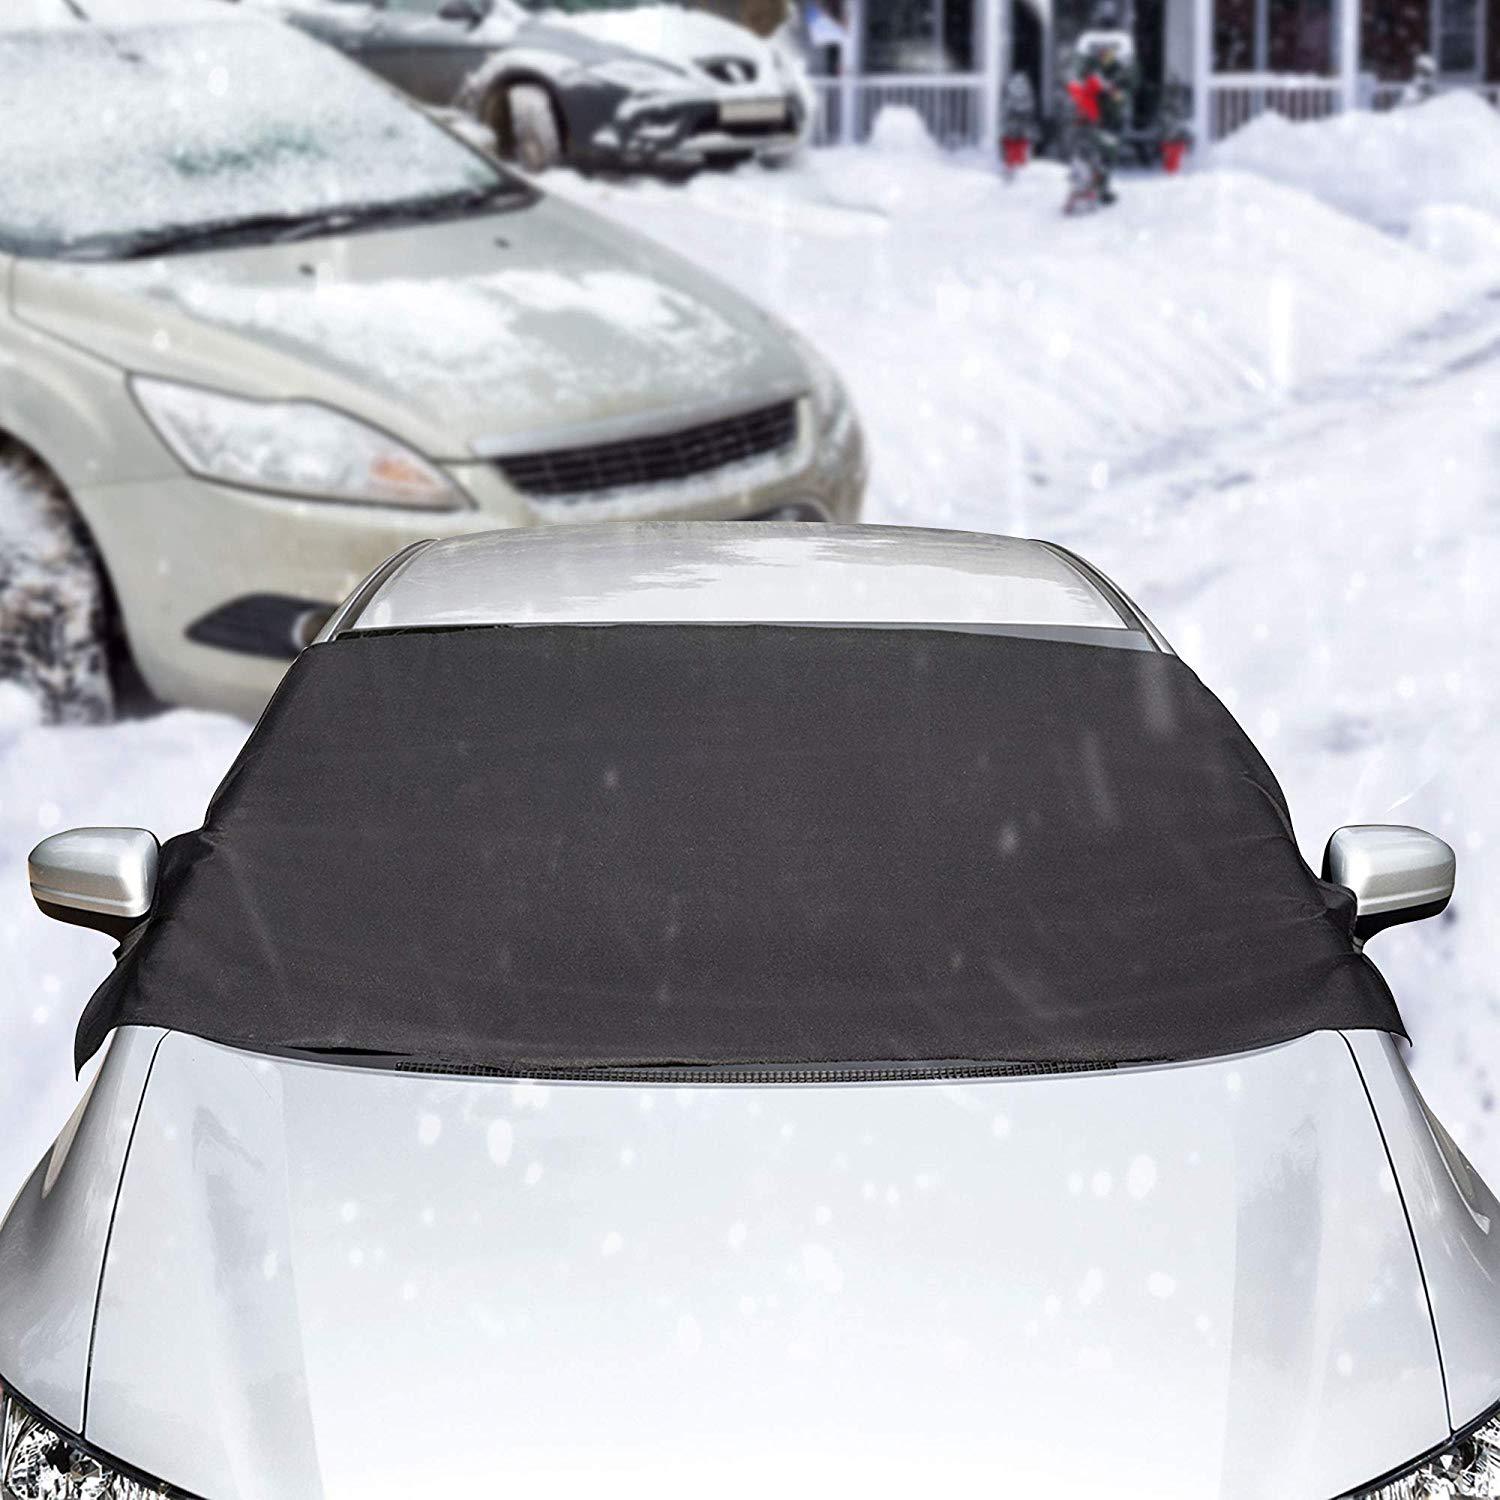 Magnetic Windscreen Snow Shield Cover - TrenzJar